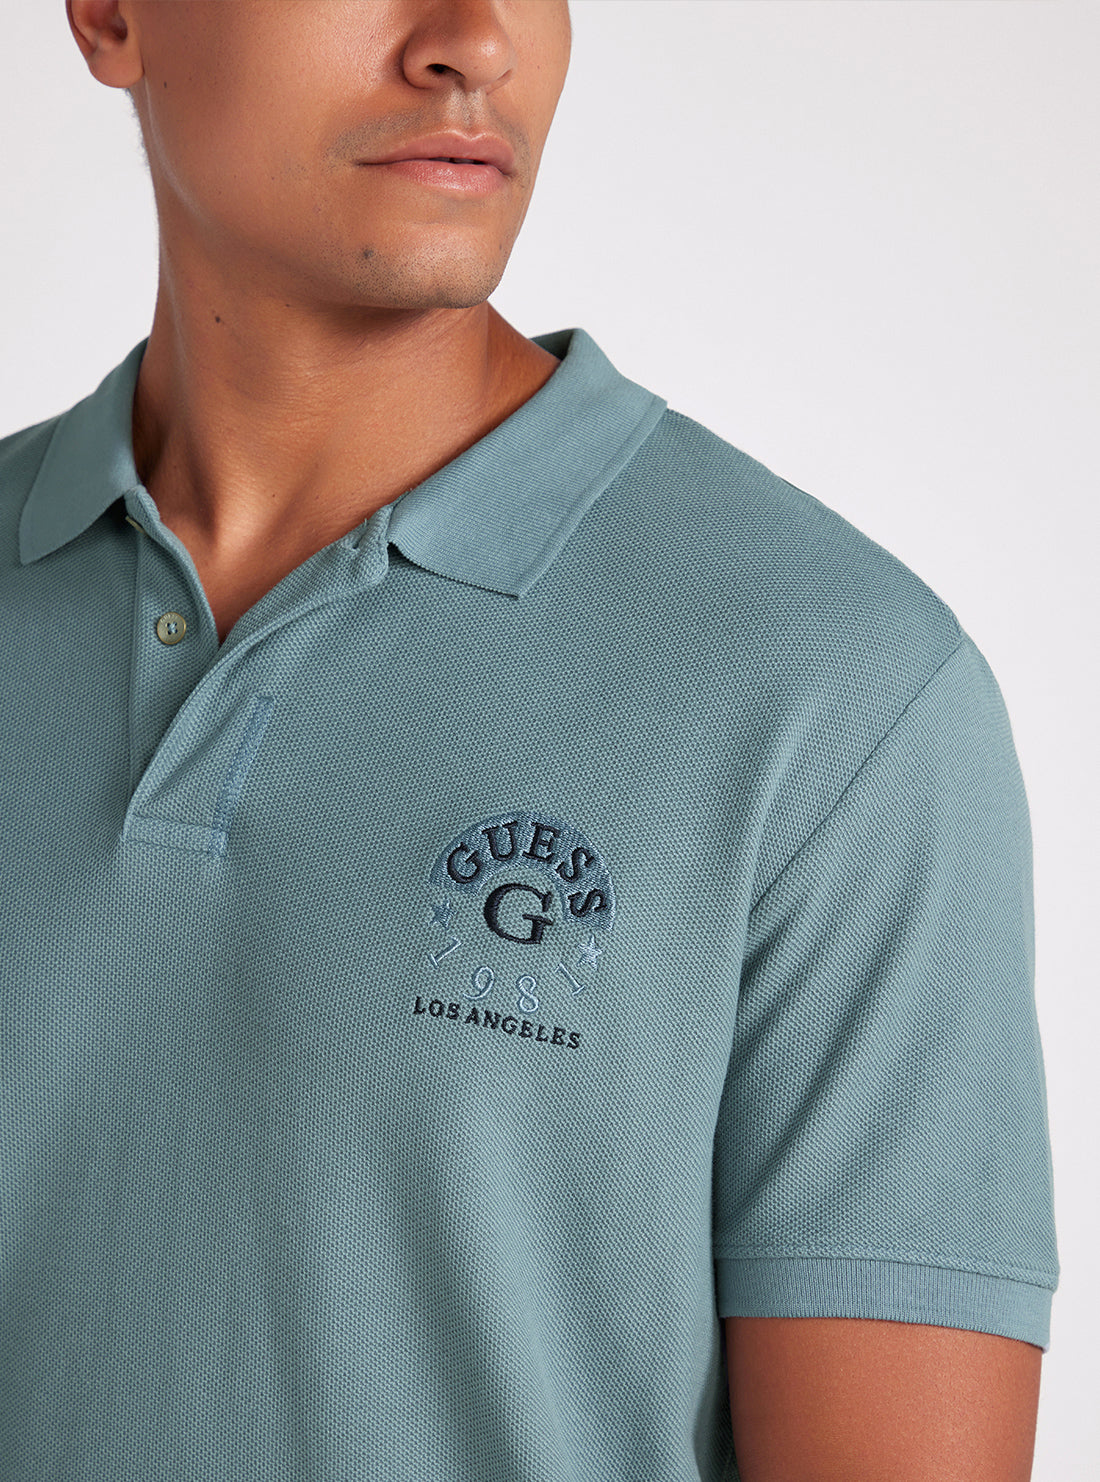 Ocean Blue Ground Logo Polo Shirt | GUESS Men's Apparel | detail view